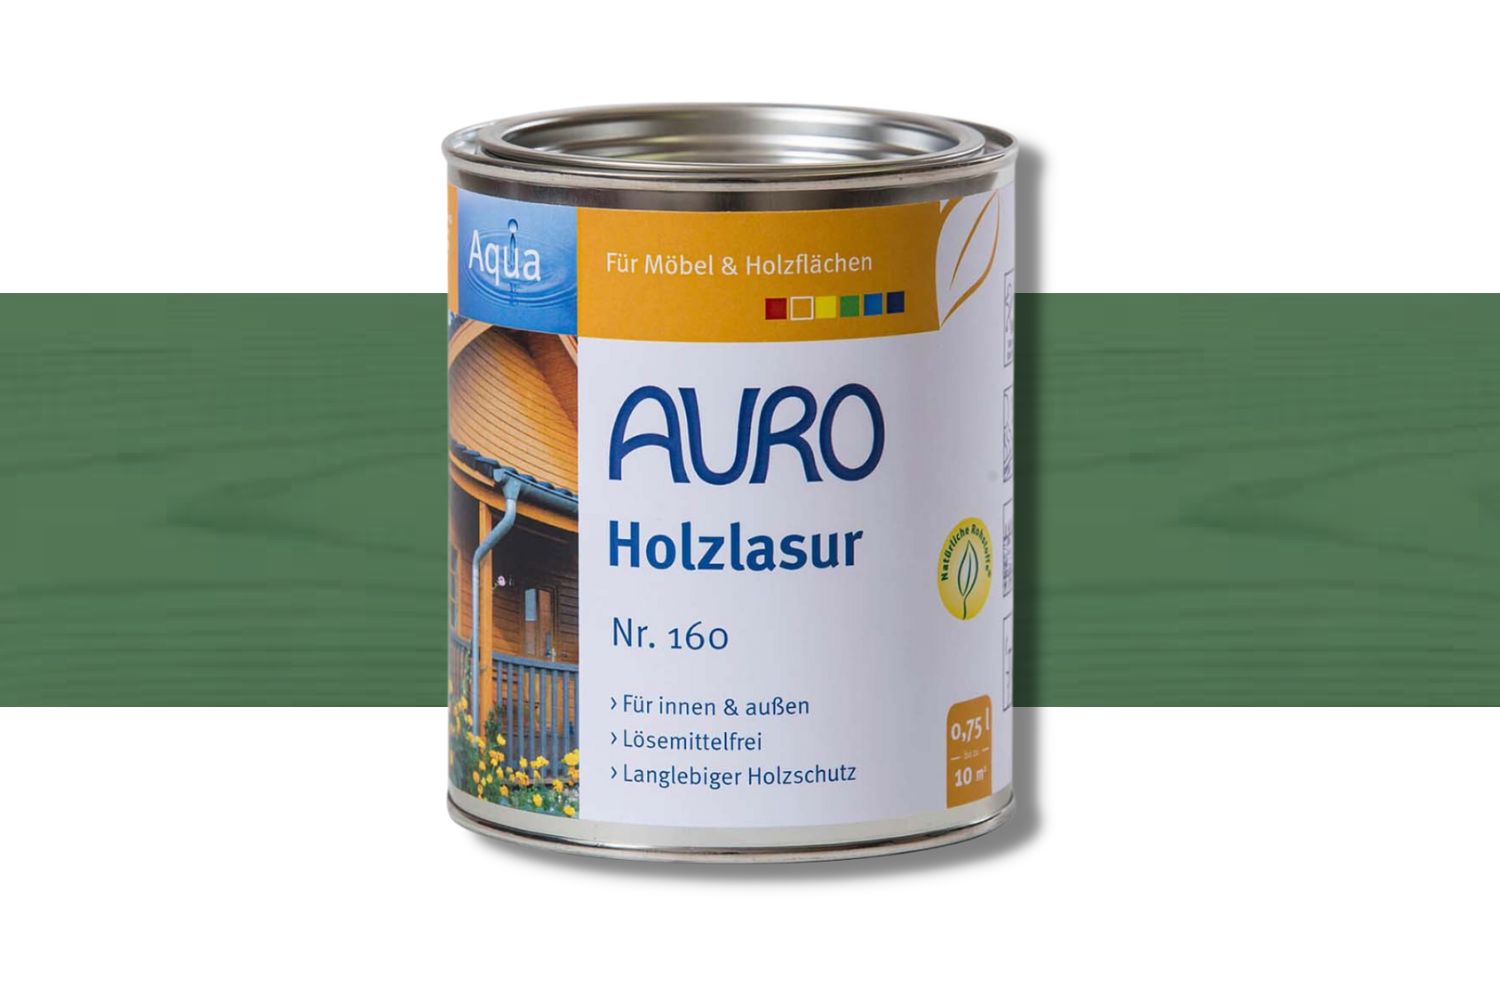  Auro Holzlasur Aqua Nr. 160